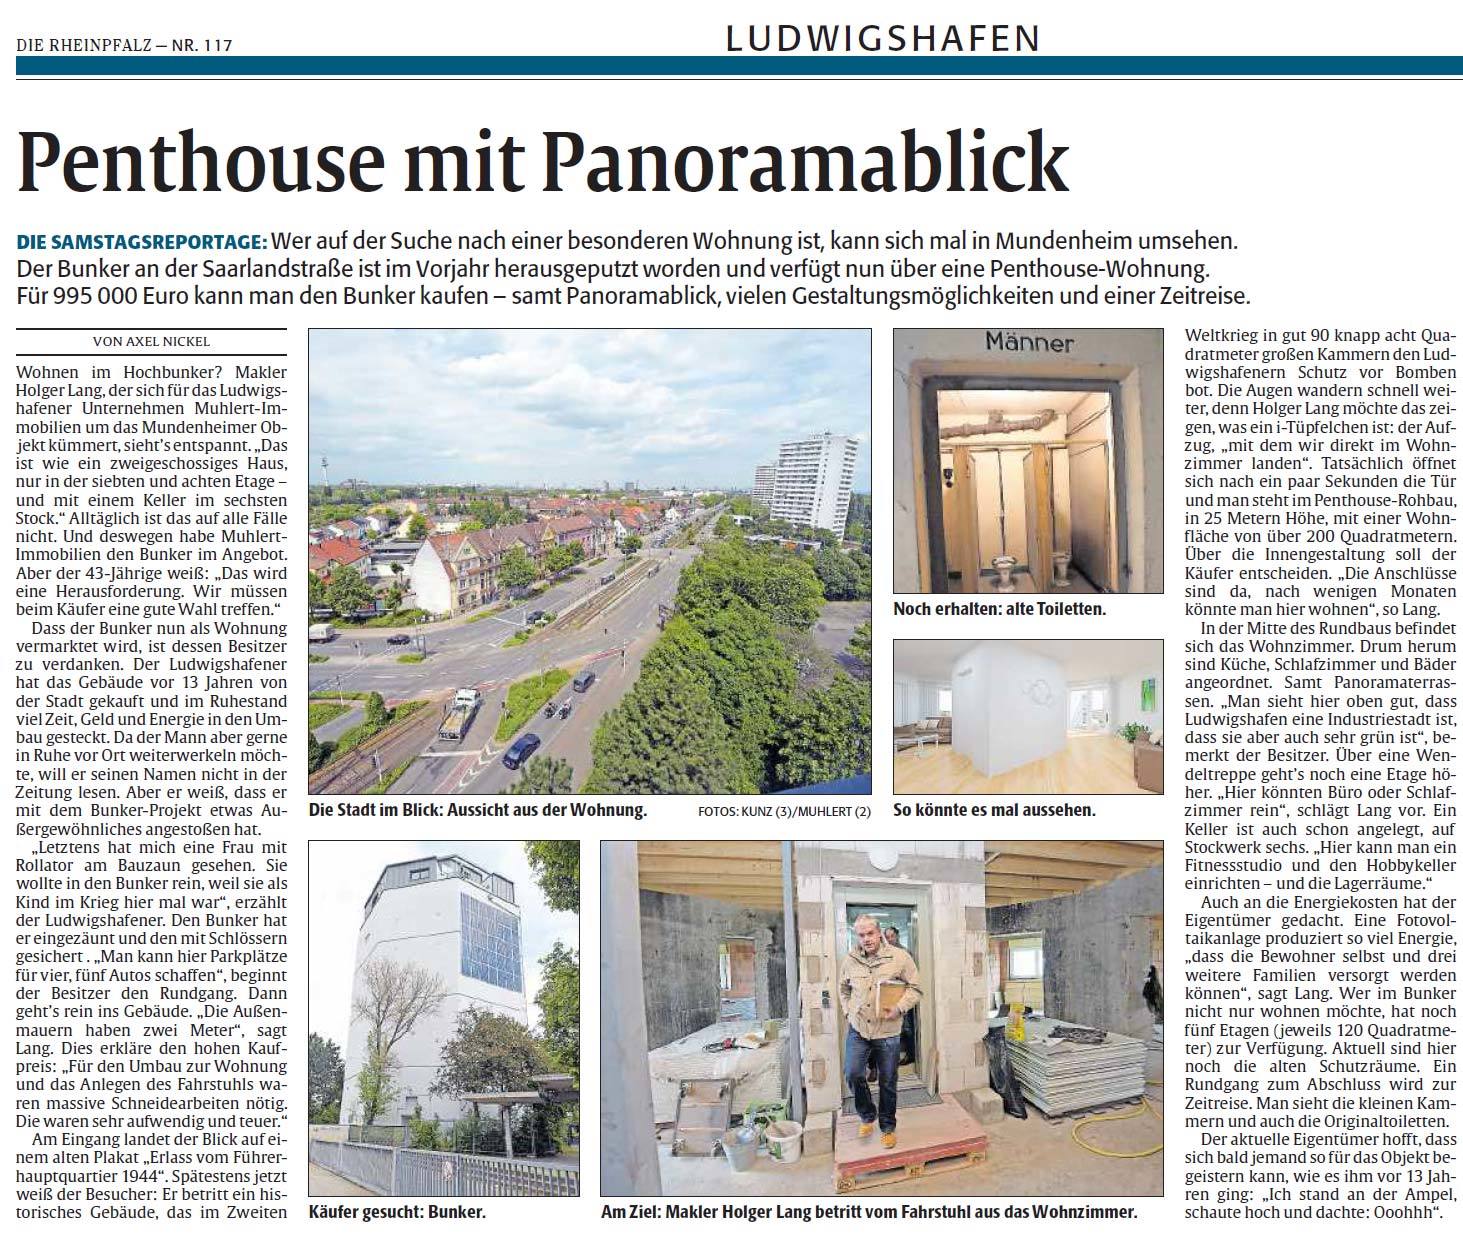 Die Rheinpfalz Samstagsreportage  - Penthouse mit Panoramablick